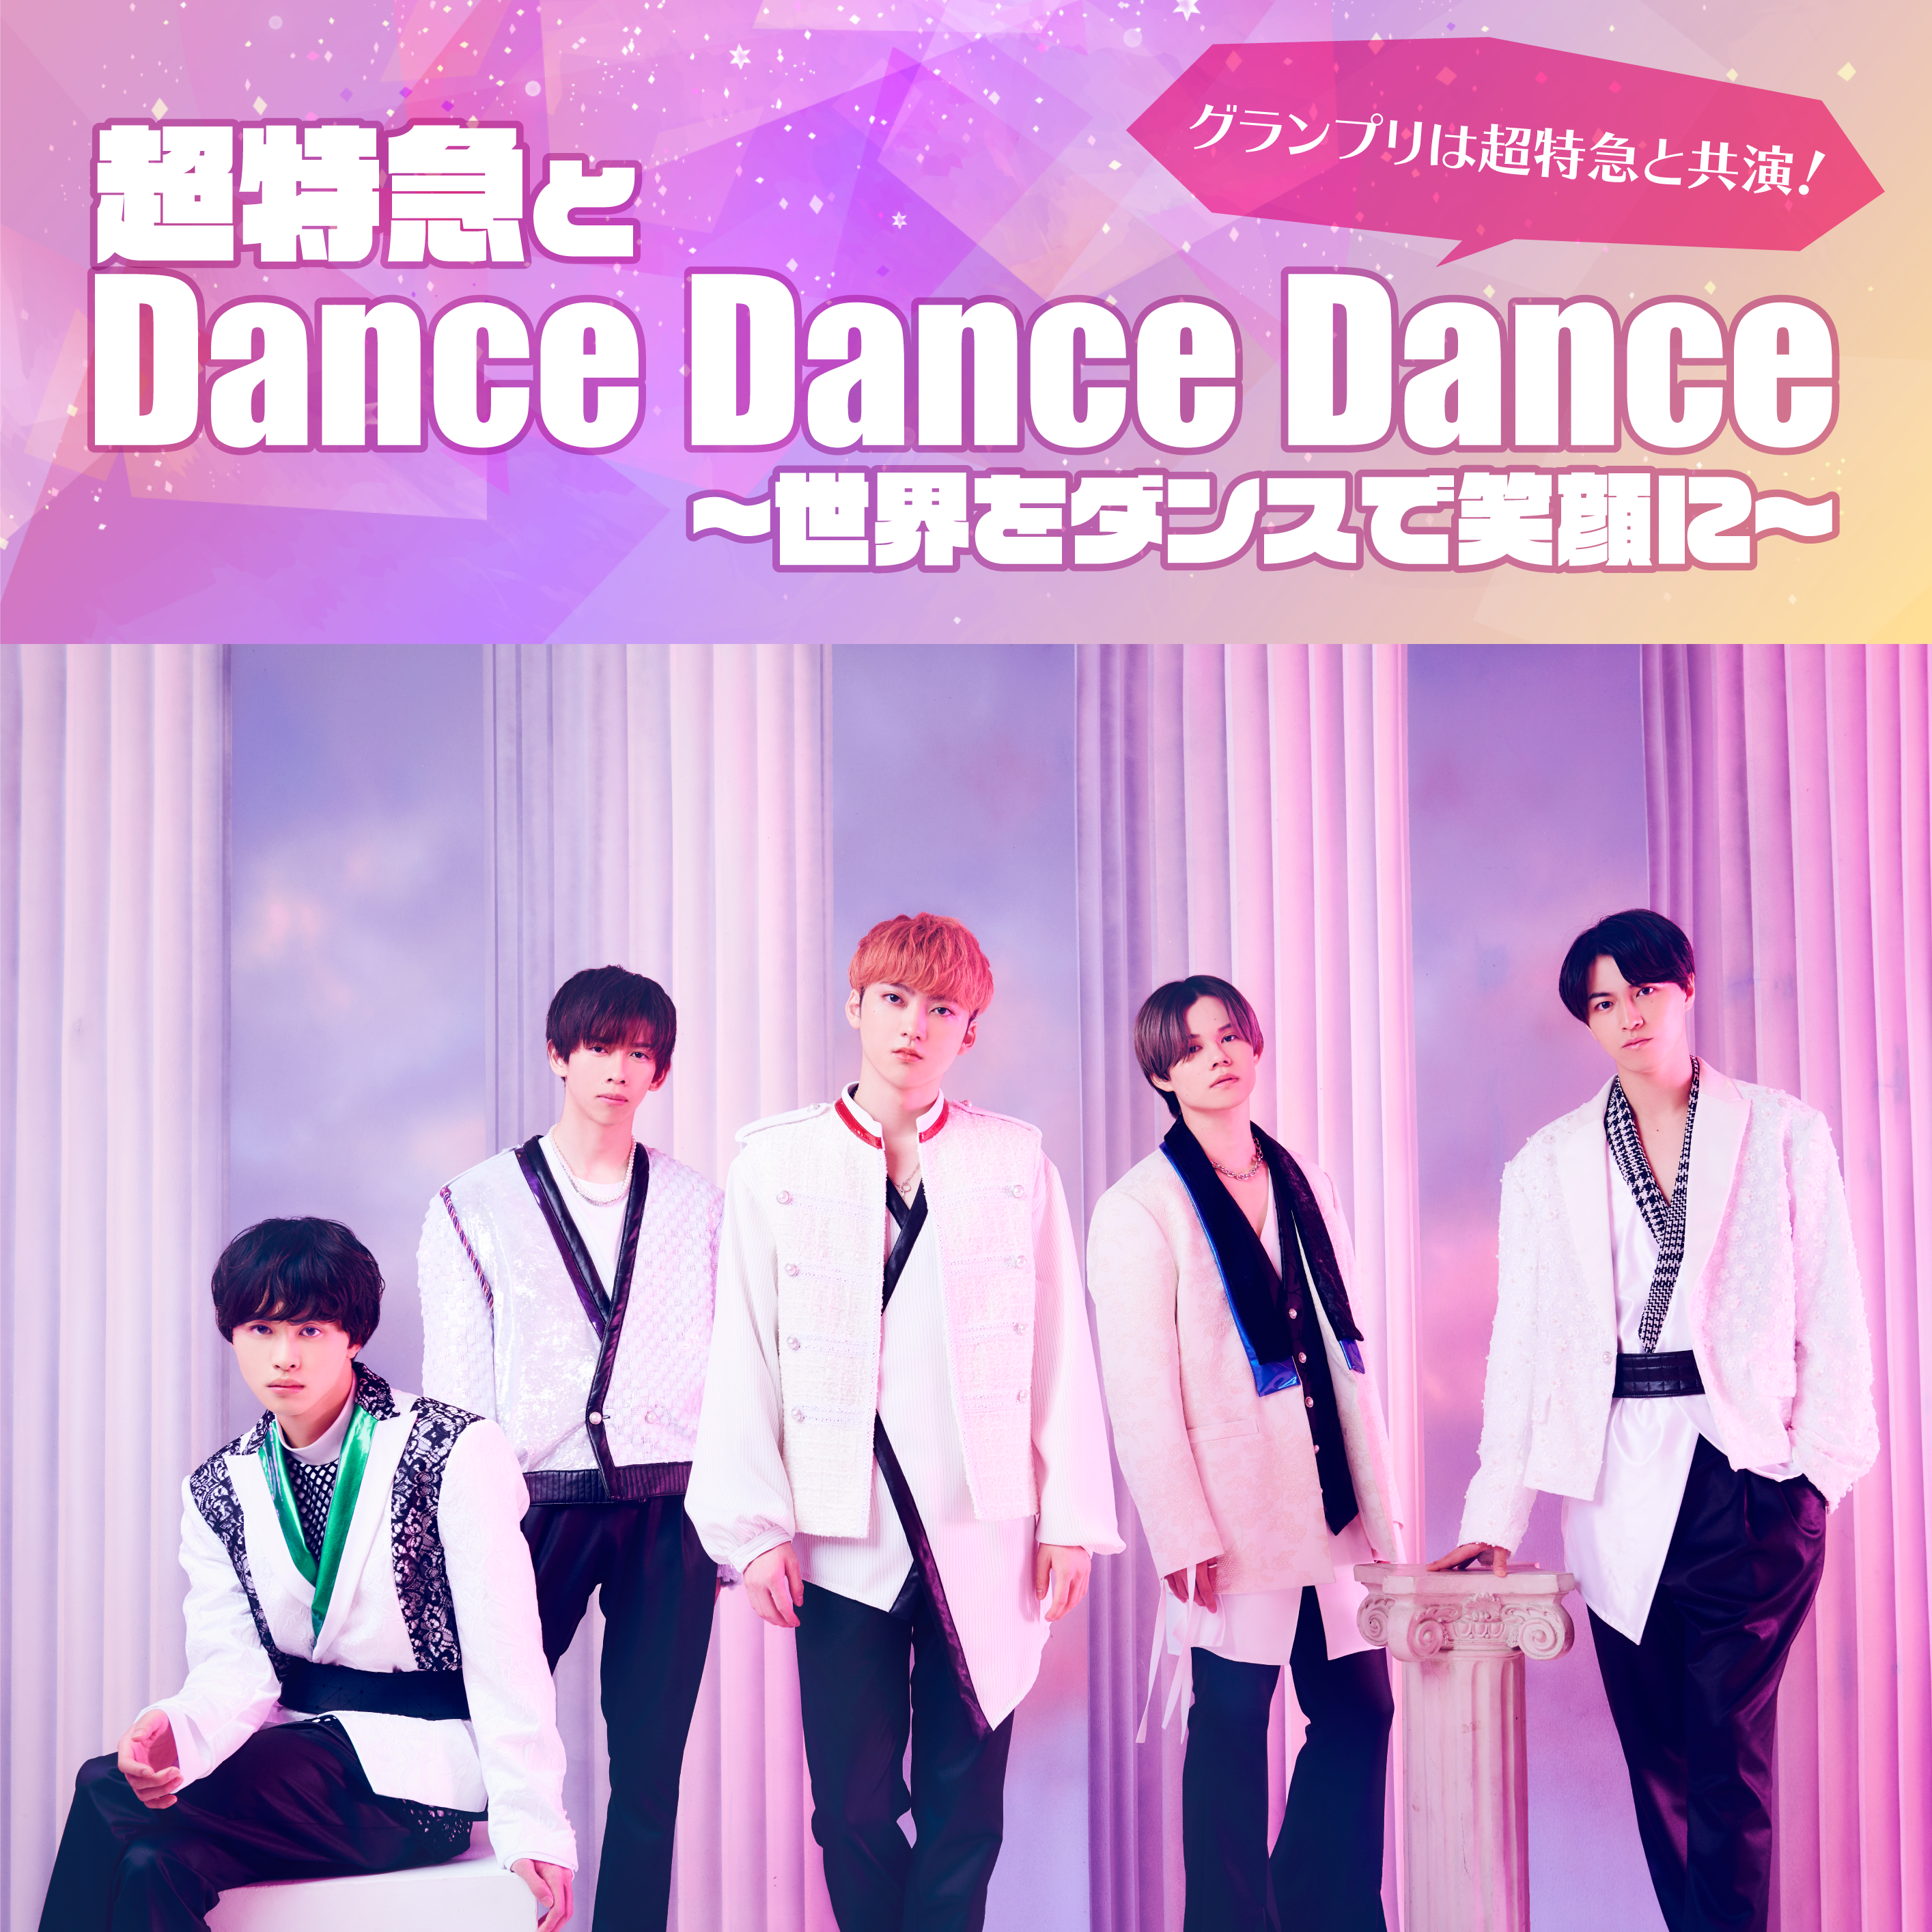 BULLET TRAIN 10th Anniversary Super Special Live「Dance Dance Dance」